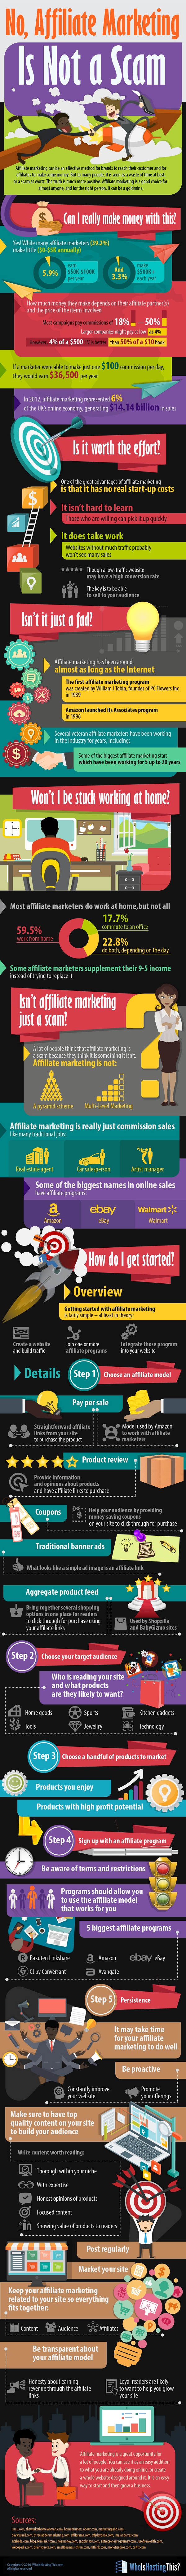 affiliate-marketing-infographic